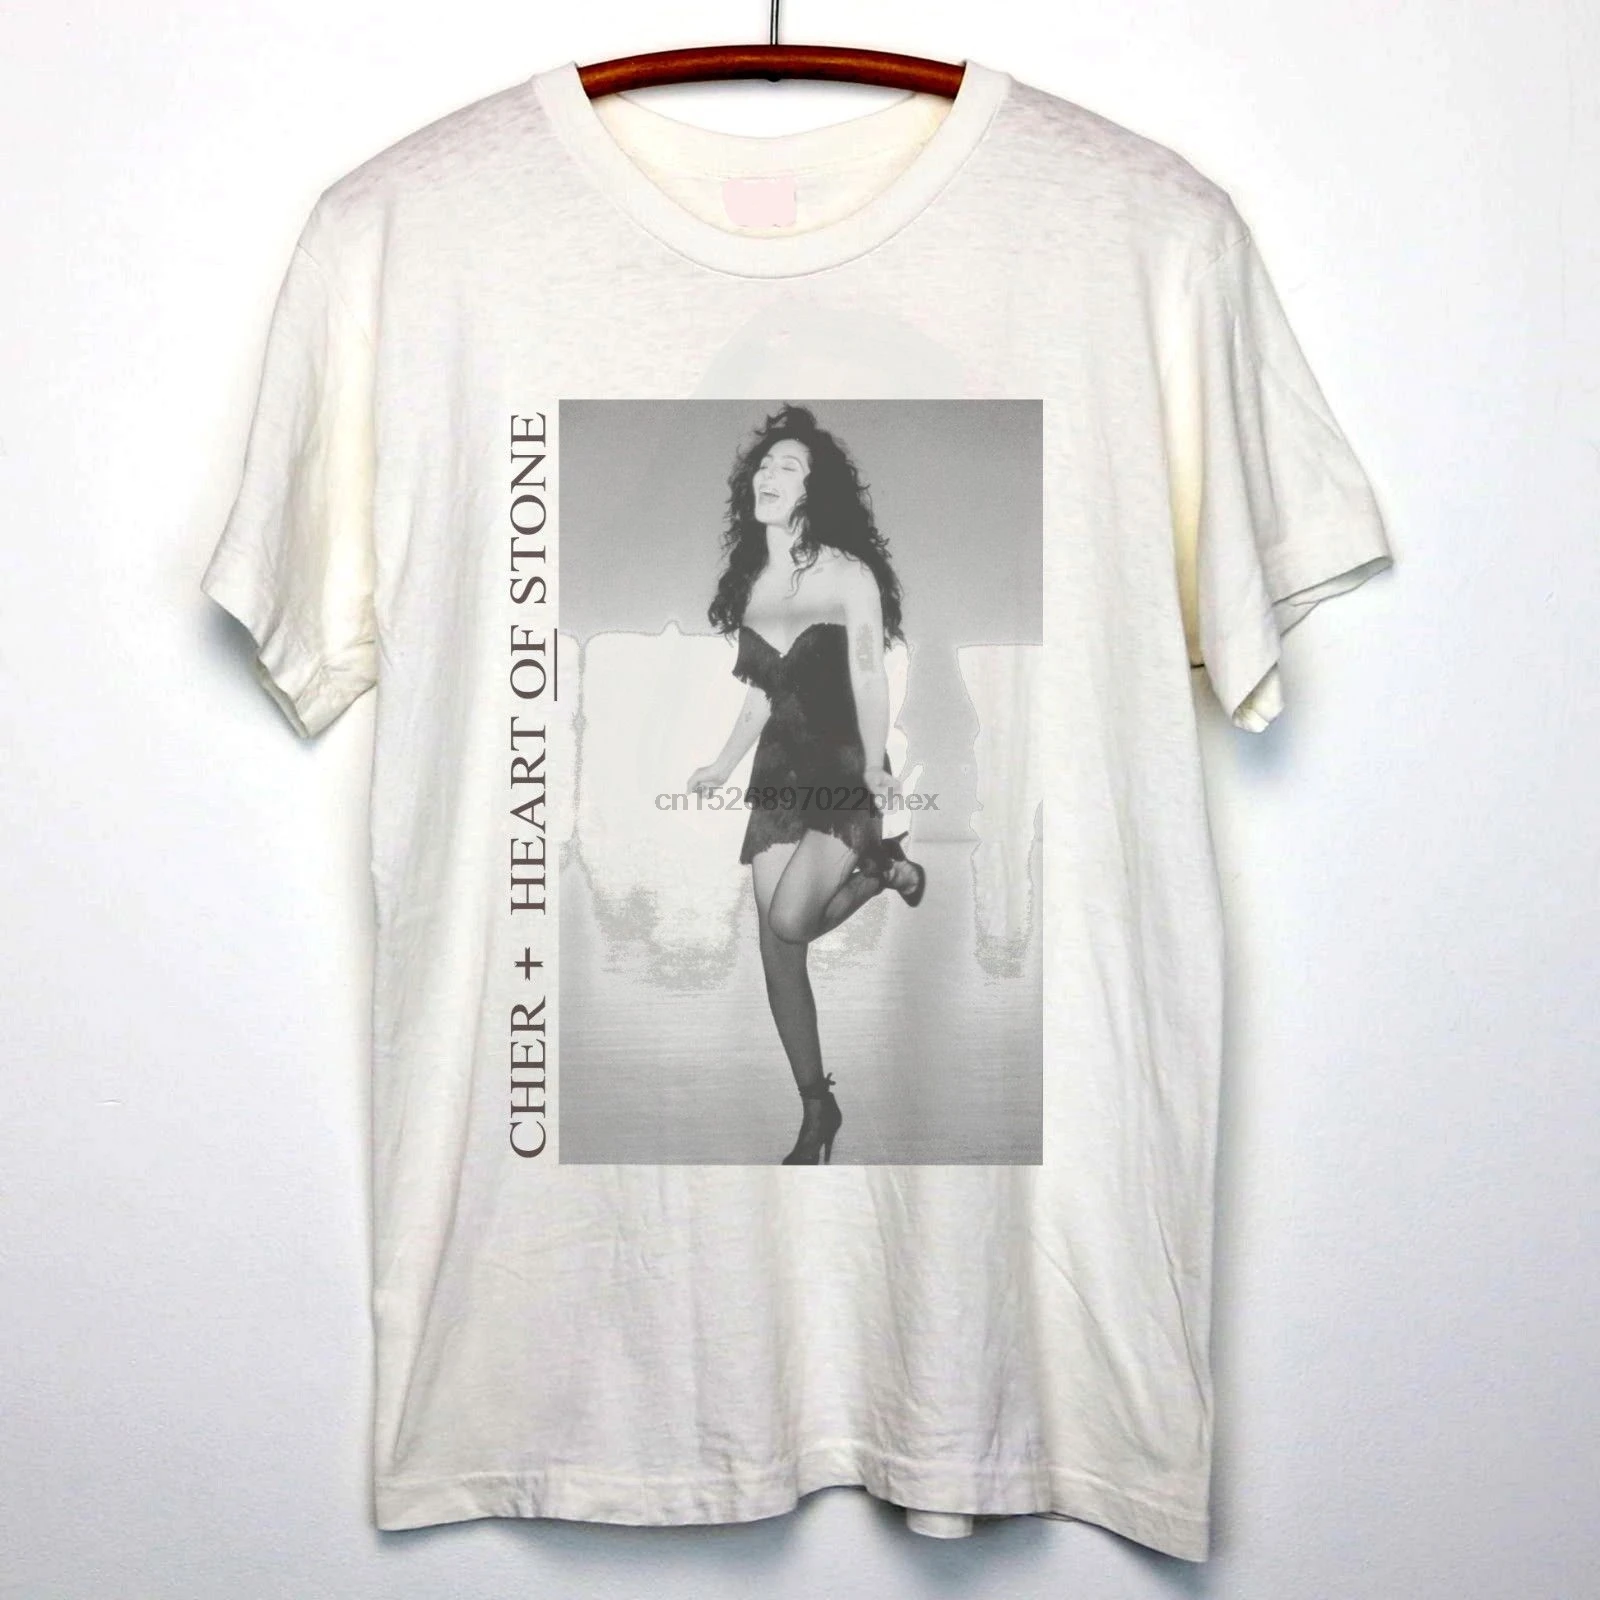 Bendecir labio cascada Camiseta CHER Heart of Stone 1989 de los 80, camiseta de Rock Pop,  concierto Tour, tamaño de S XL, Reimpresión|Camisetas| - AliExpress